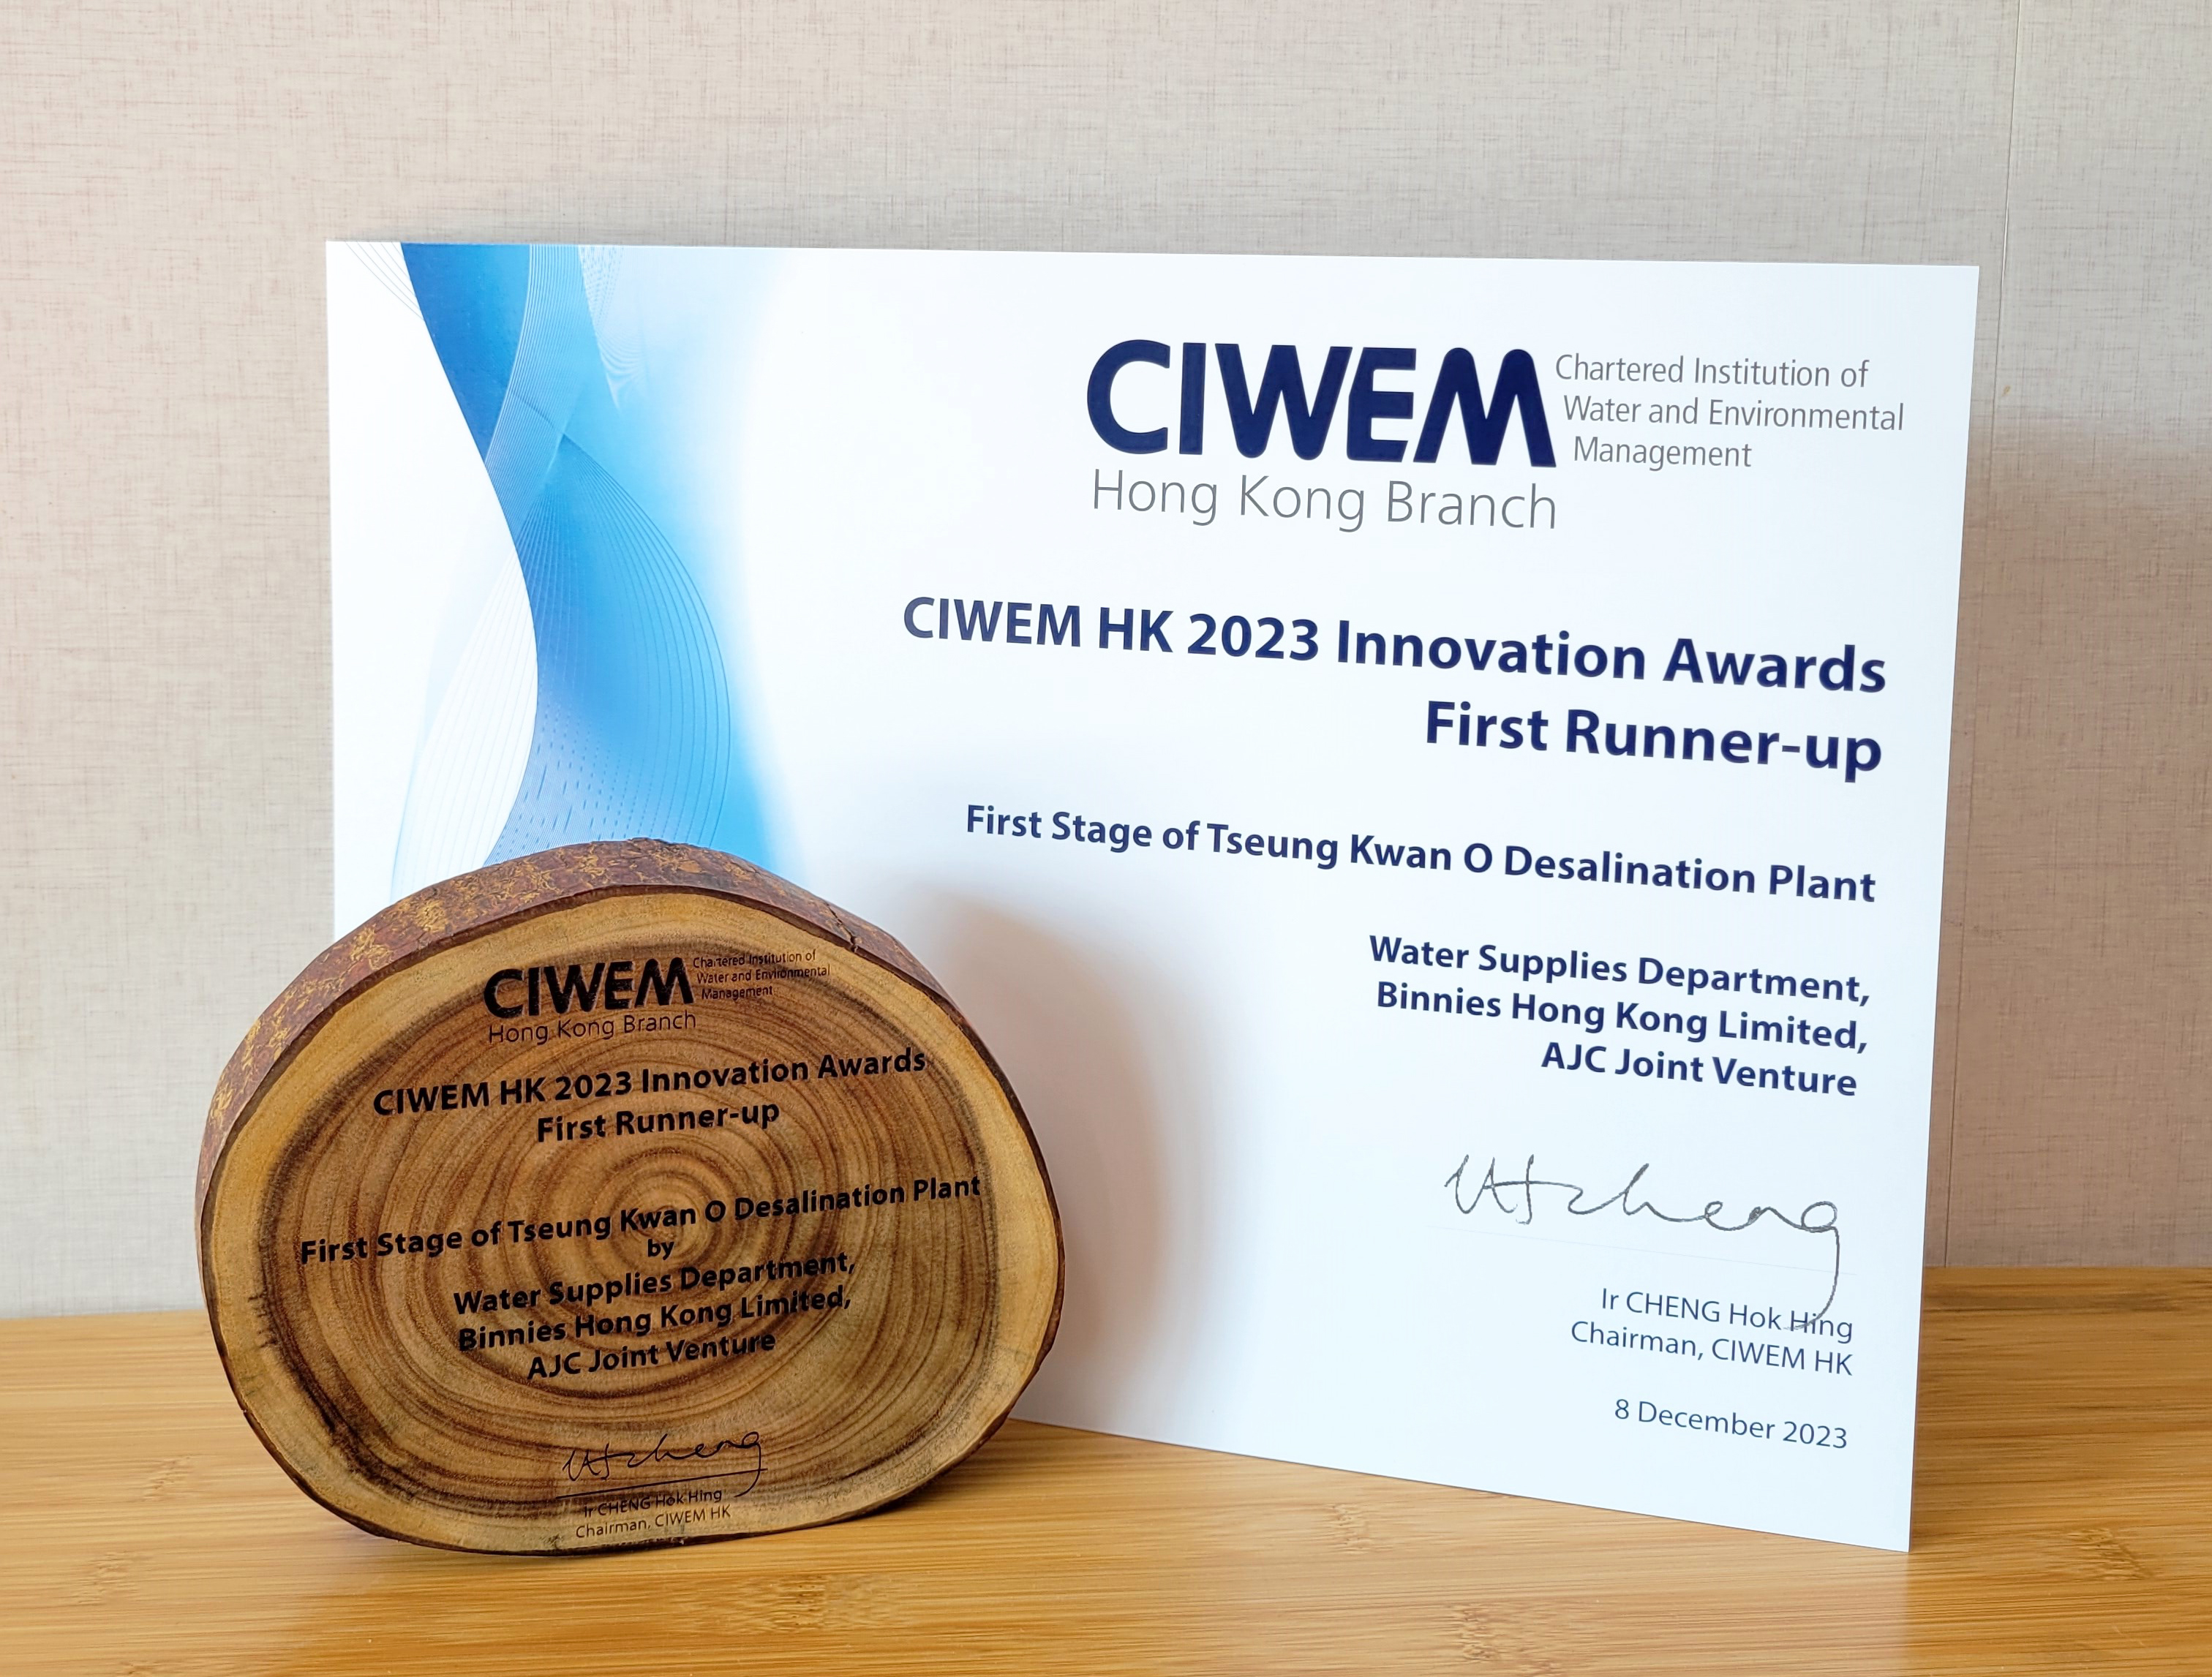 CIWEM HK 2023 Innovation Awards